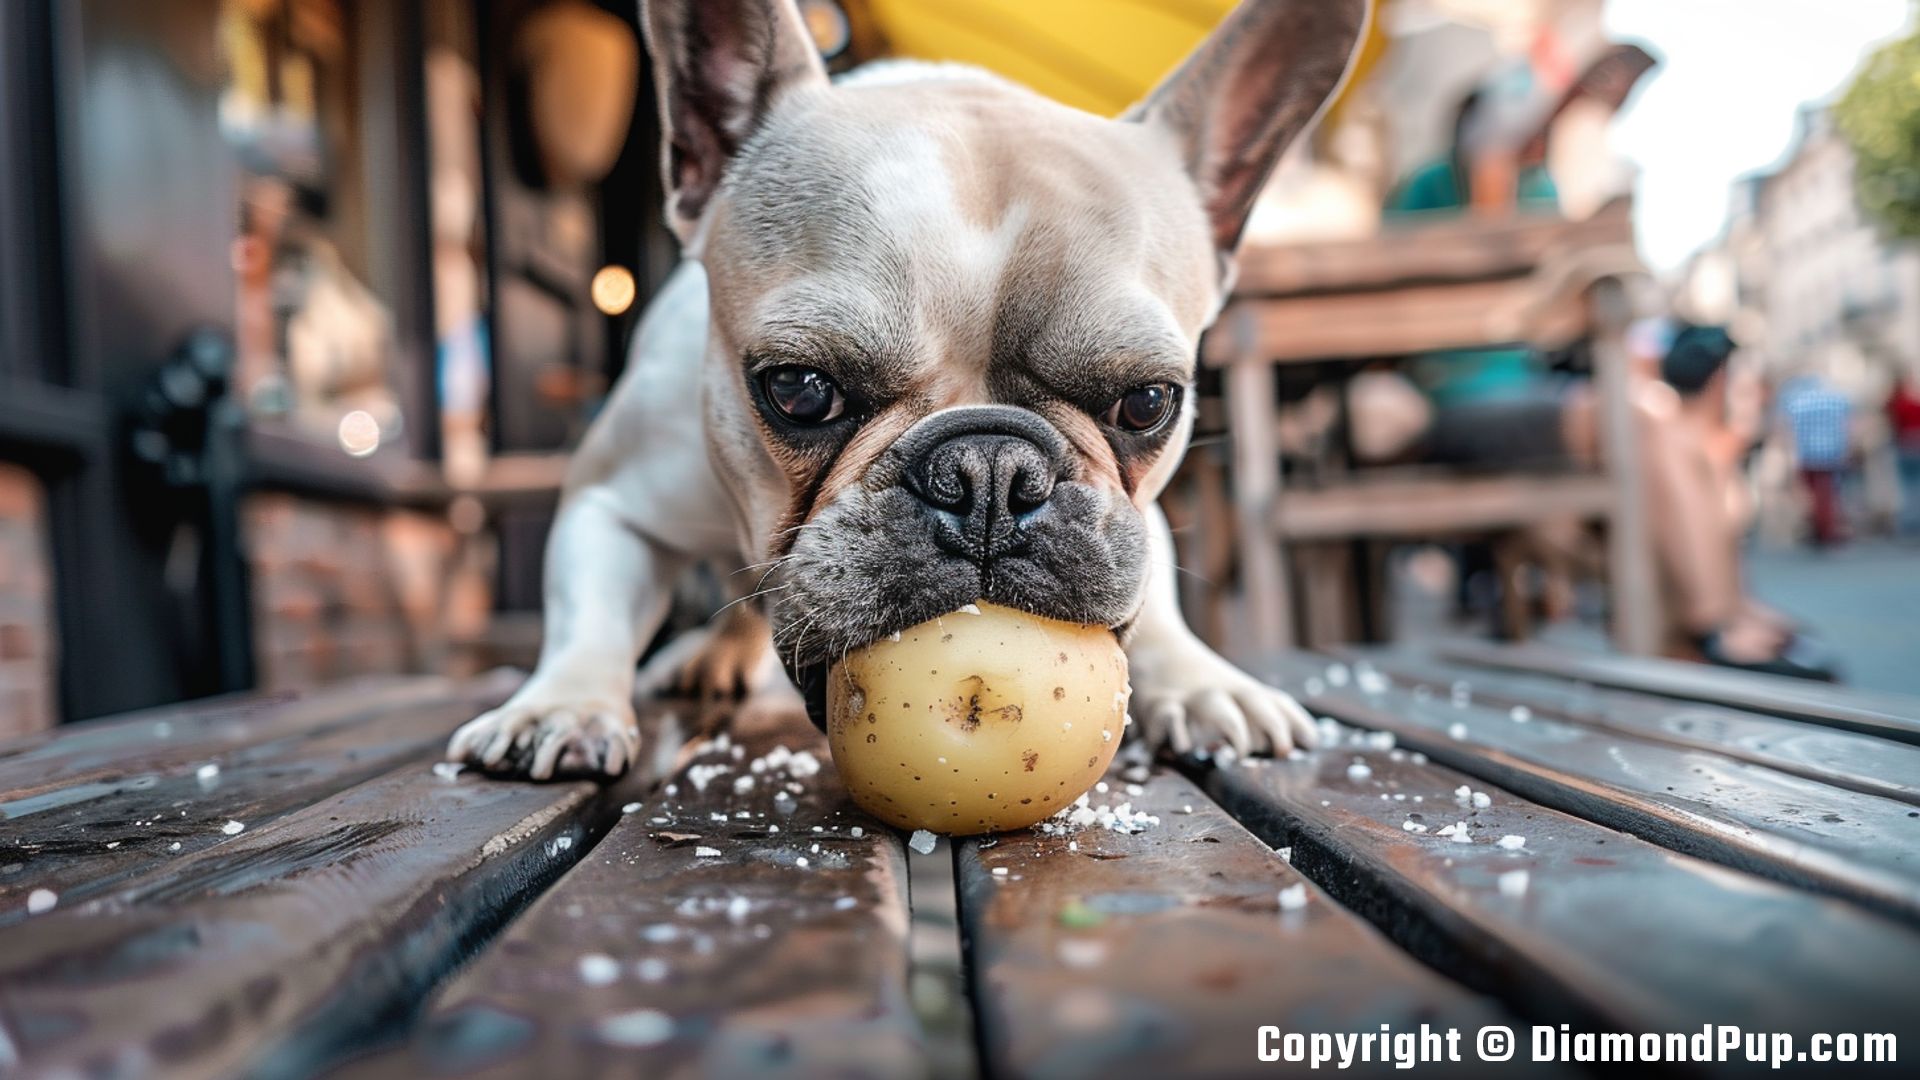 Photograph of a Cute French Bulldog Eating Potato